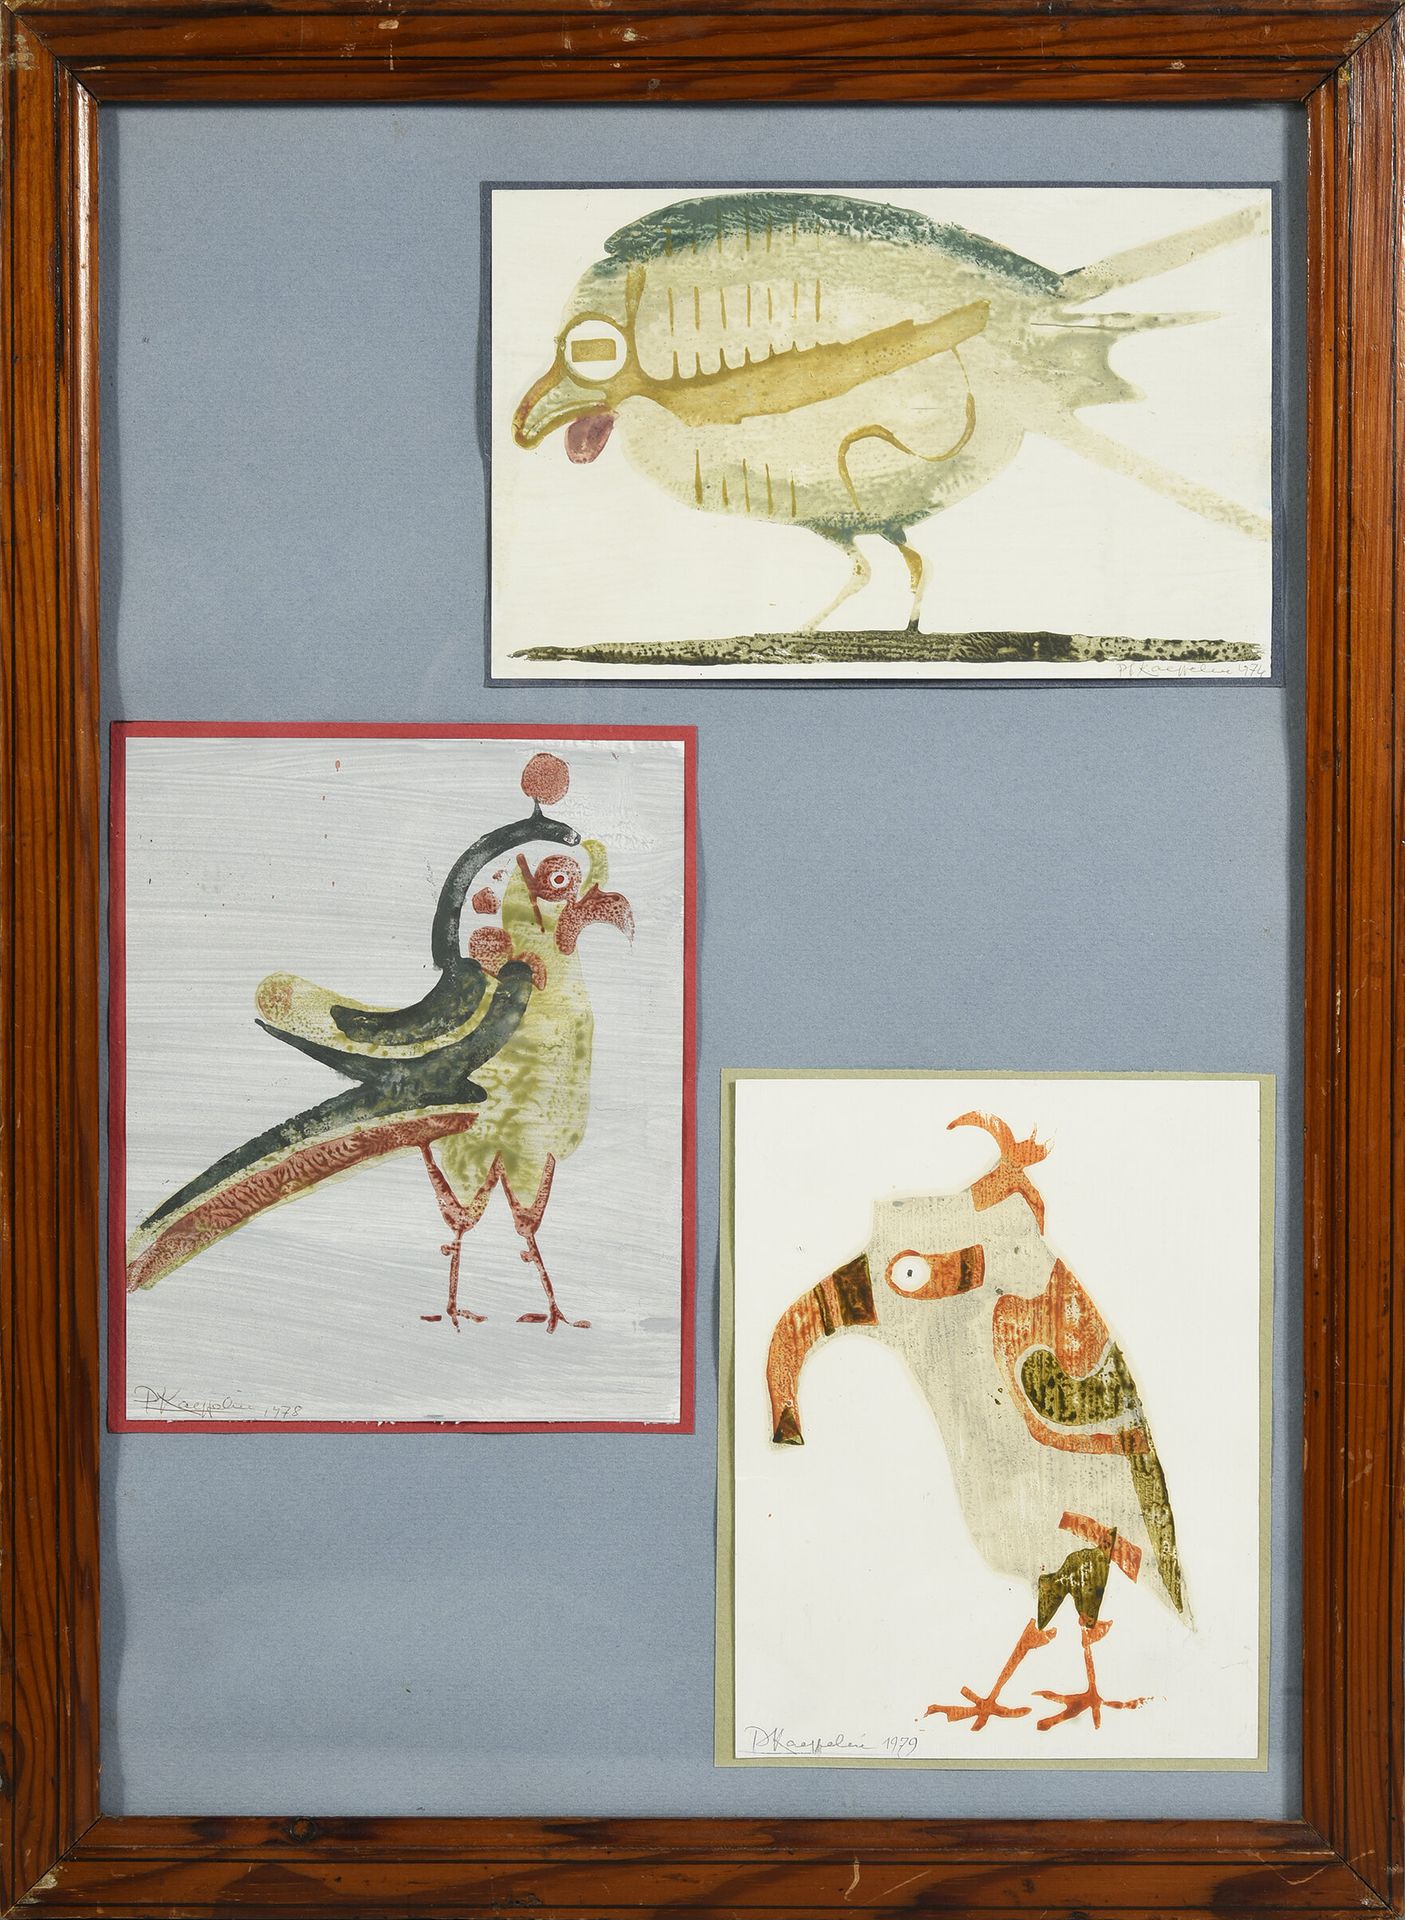 Philippe KAEPPELIN (1918-2011) 
Phantasmagorical animals.
Suite of 4 serigraphs.